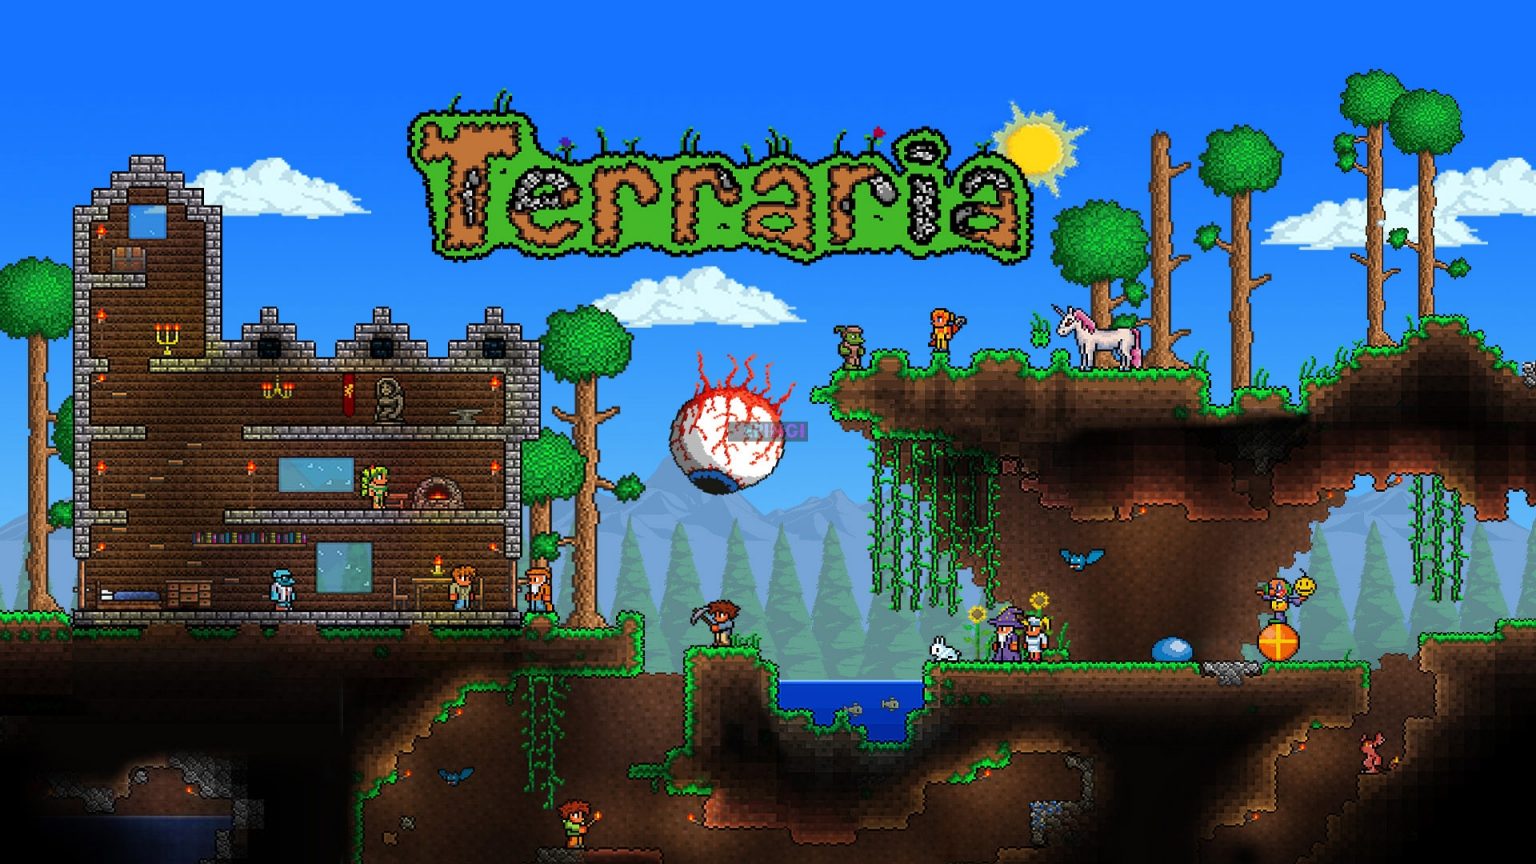 Terraria Full Version PC Game Download